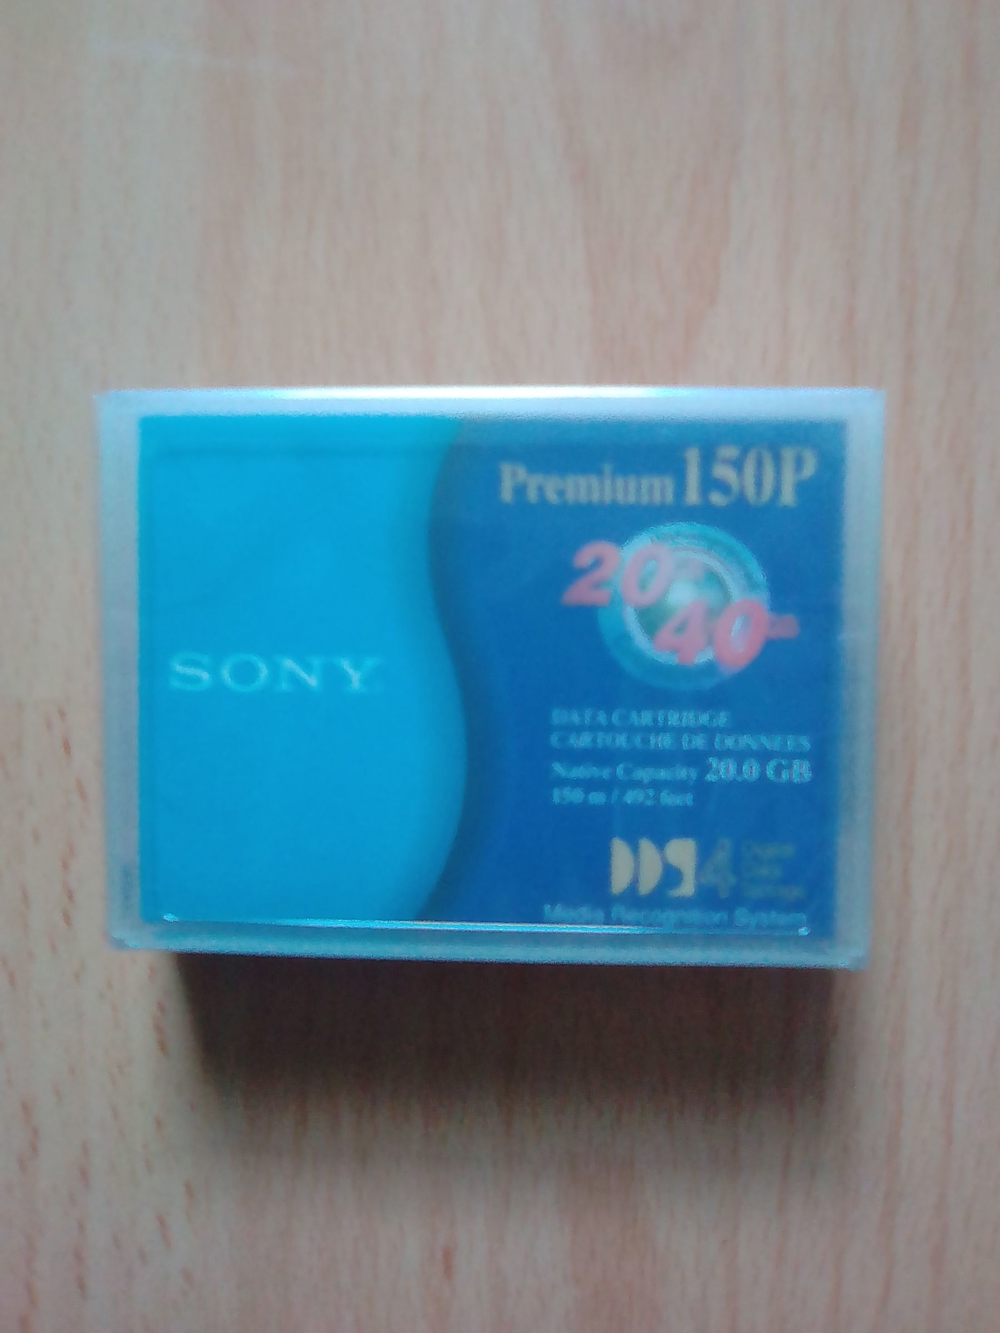 Sony Premium 150 P 20/40GB Data Cartridge OVP